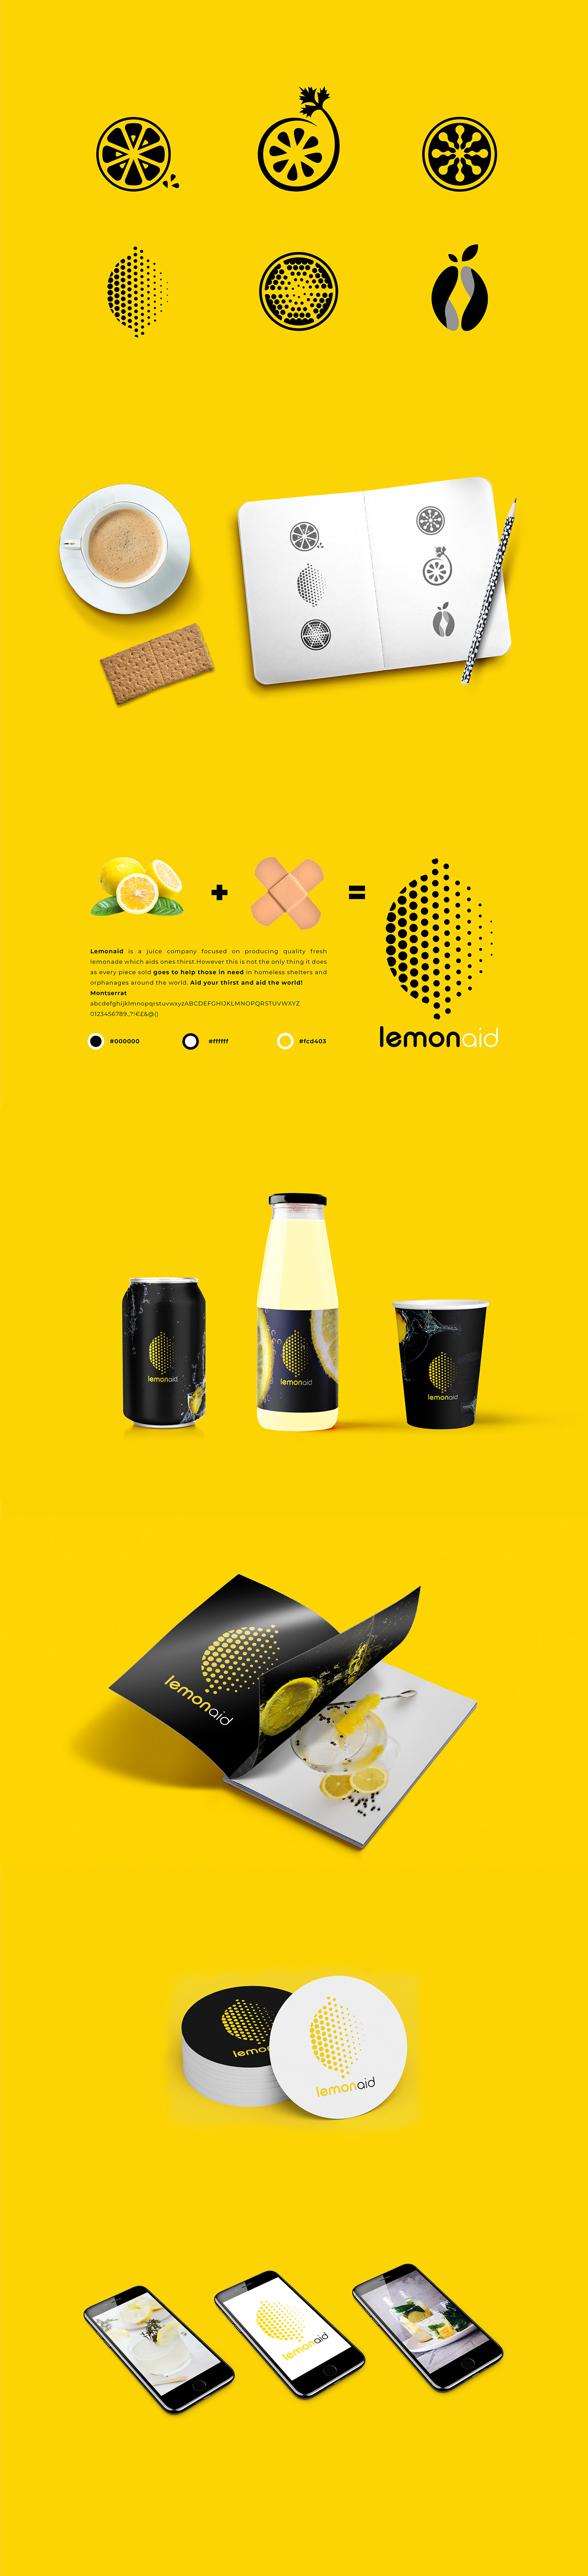 lemon logo brand identity lemonade Aid fresh drink juice summer